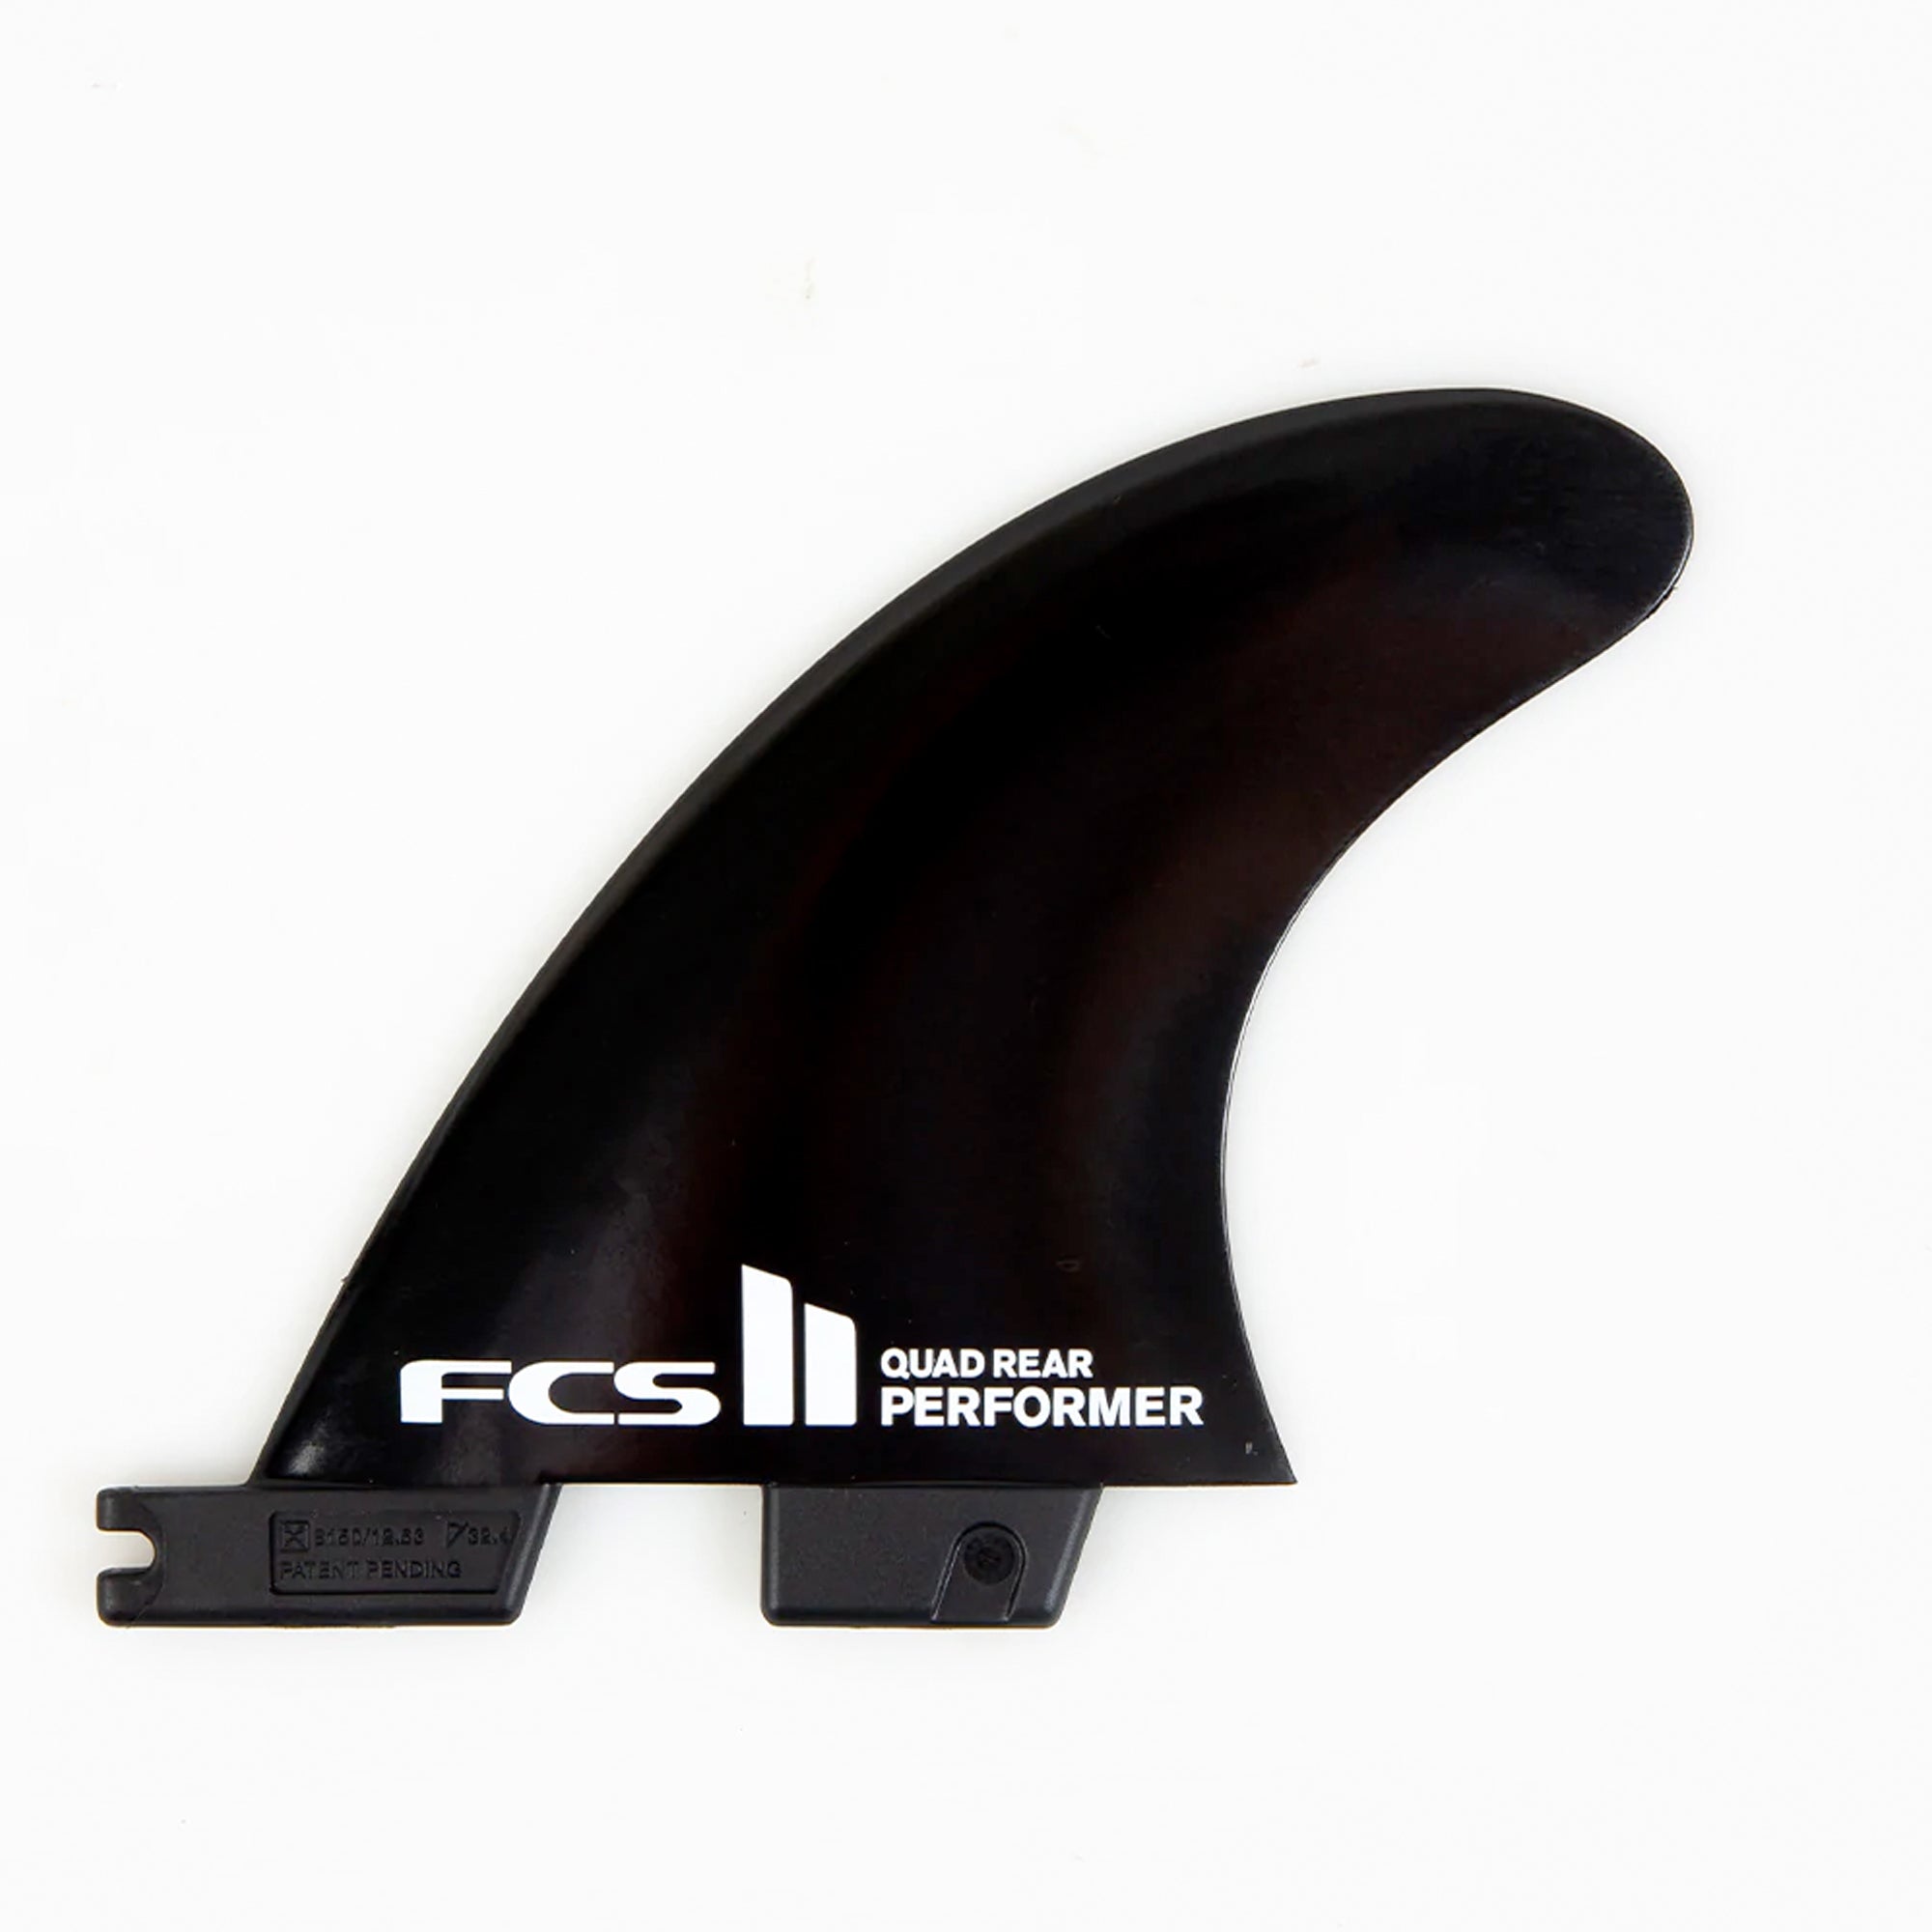 FCS II Performer Quad Rear Surfboard Fins